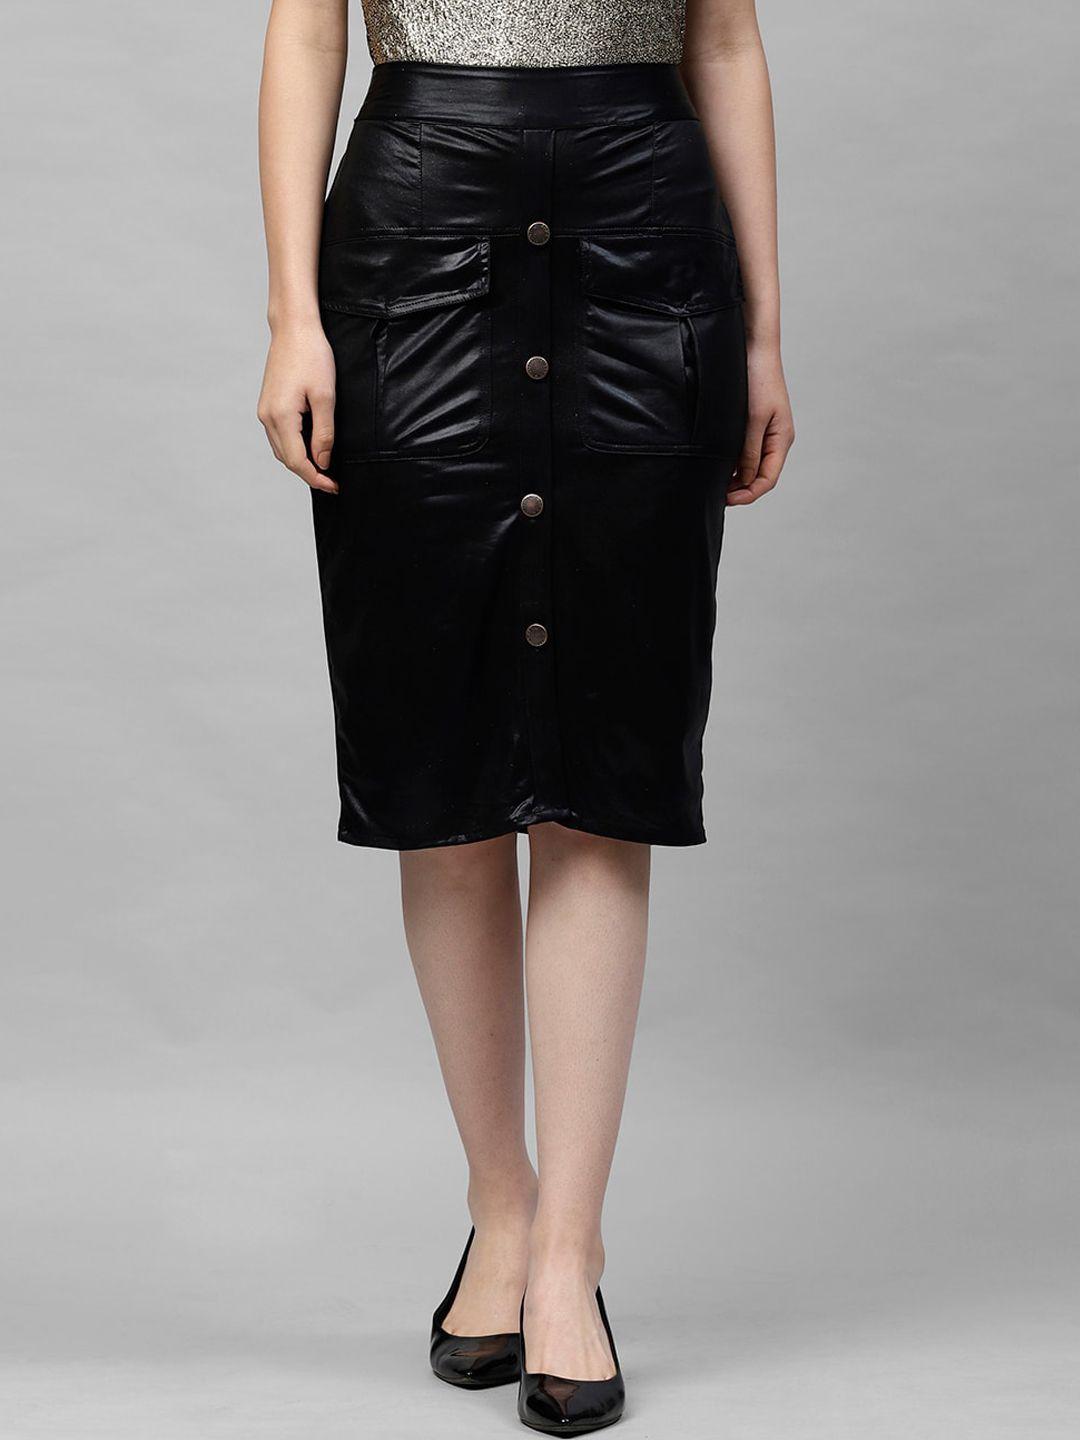 athena women black solid knee length skirt